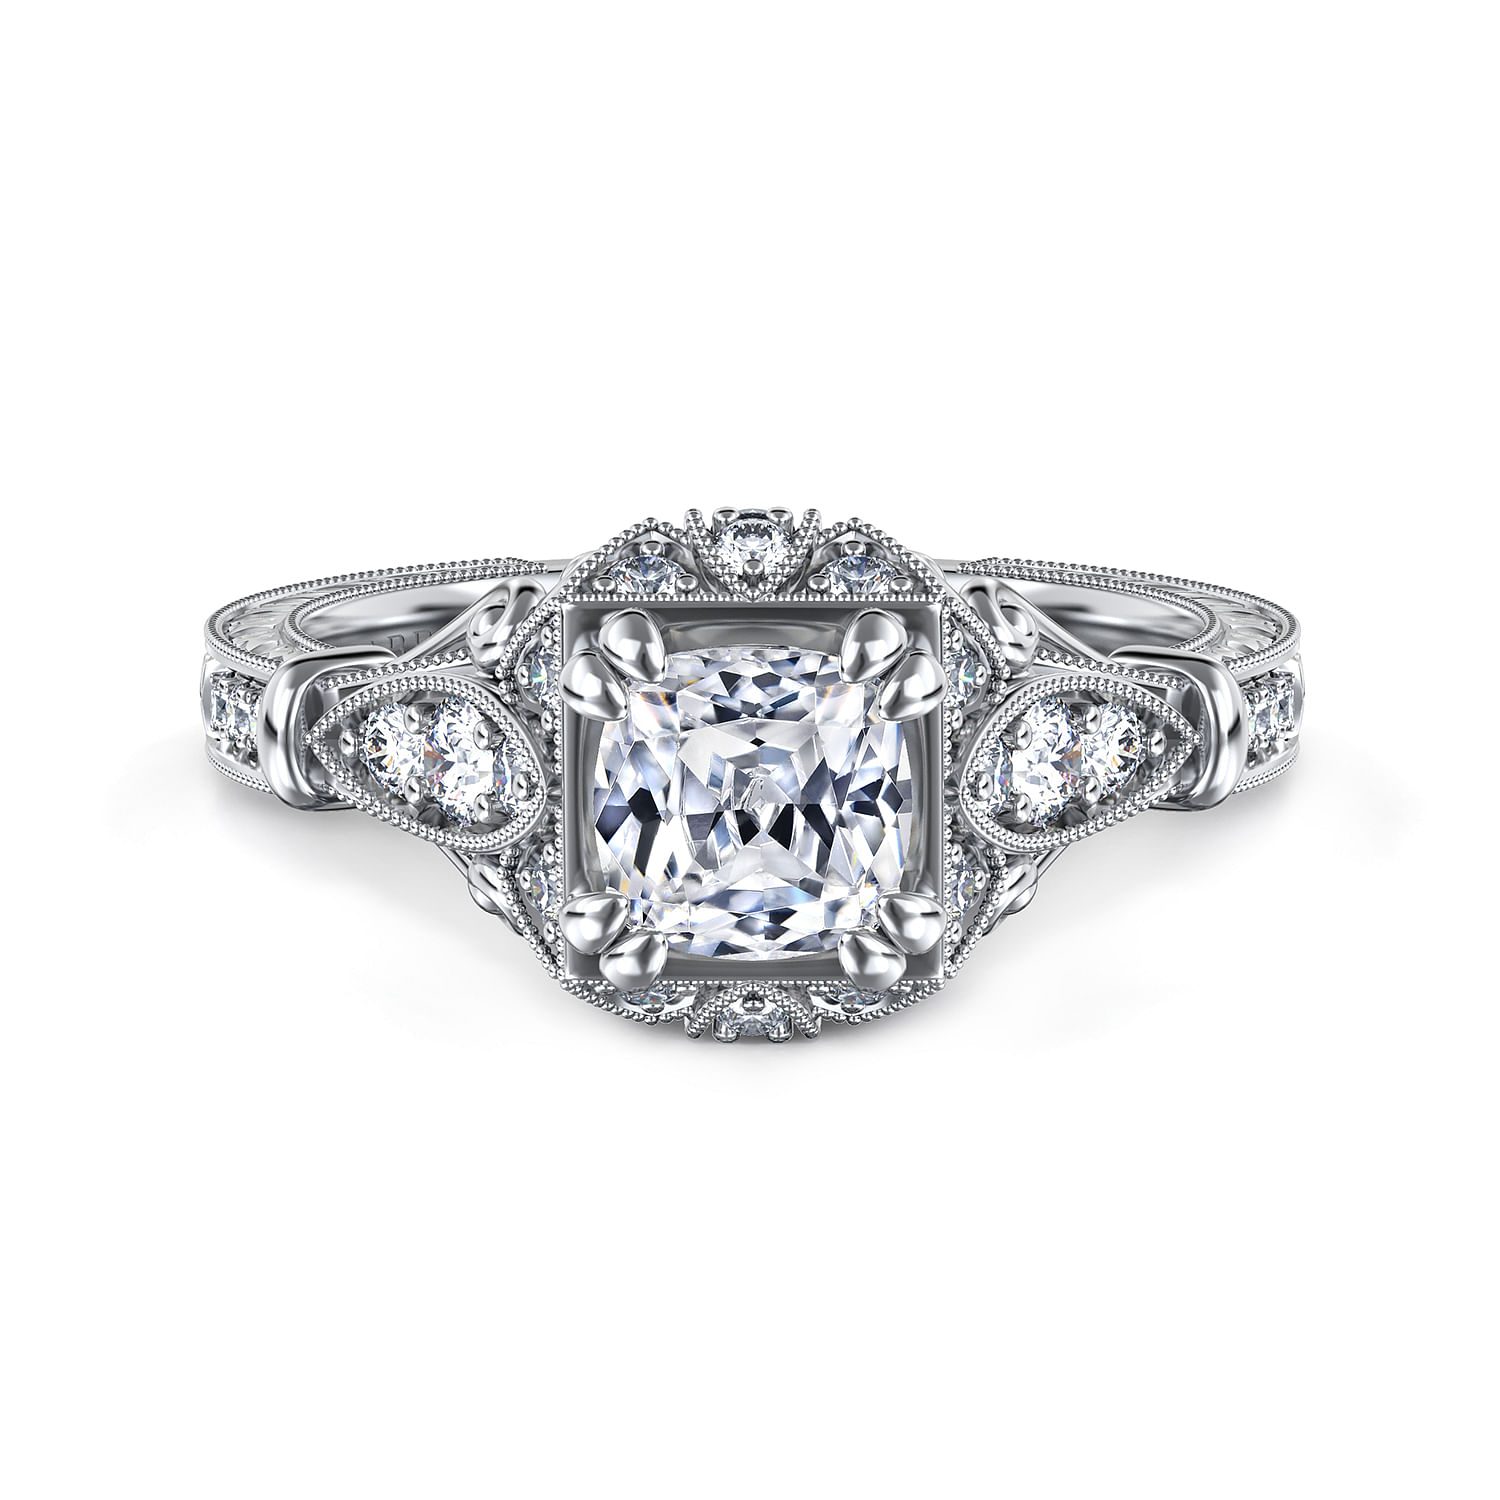 Unique 14K White Gold Vintage Inspired Cushion Cut Halo Diamond Engagement Ring